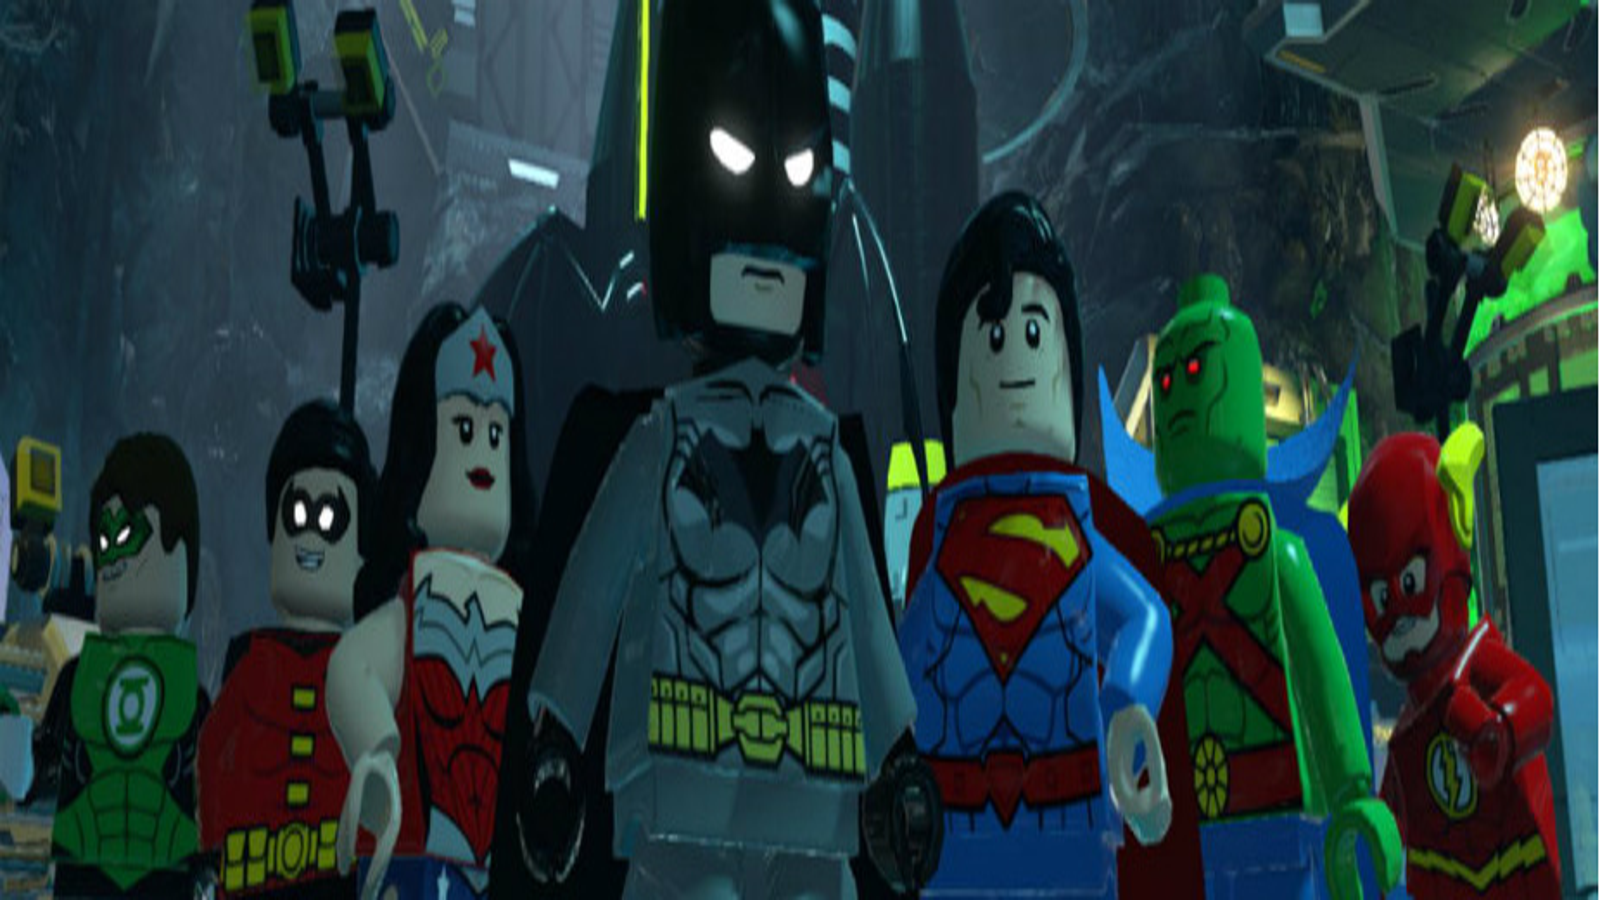 baseball at donere med uret Lego Batman 3 Codes and Cheats - Lego Batman 3 Beyond Gotham | VG247